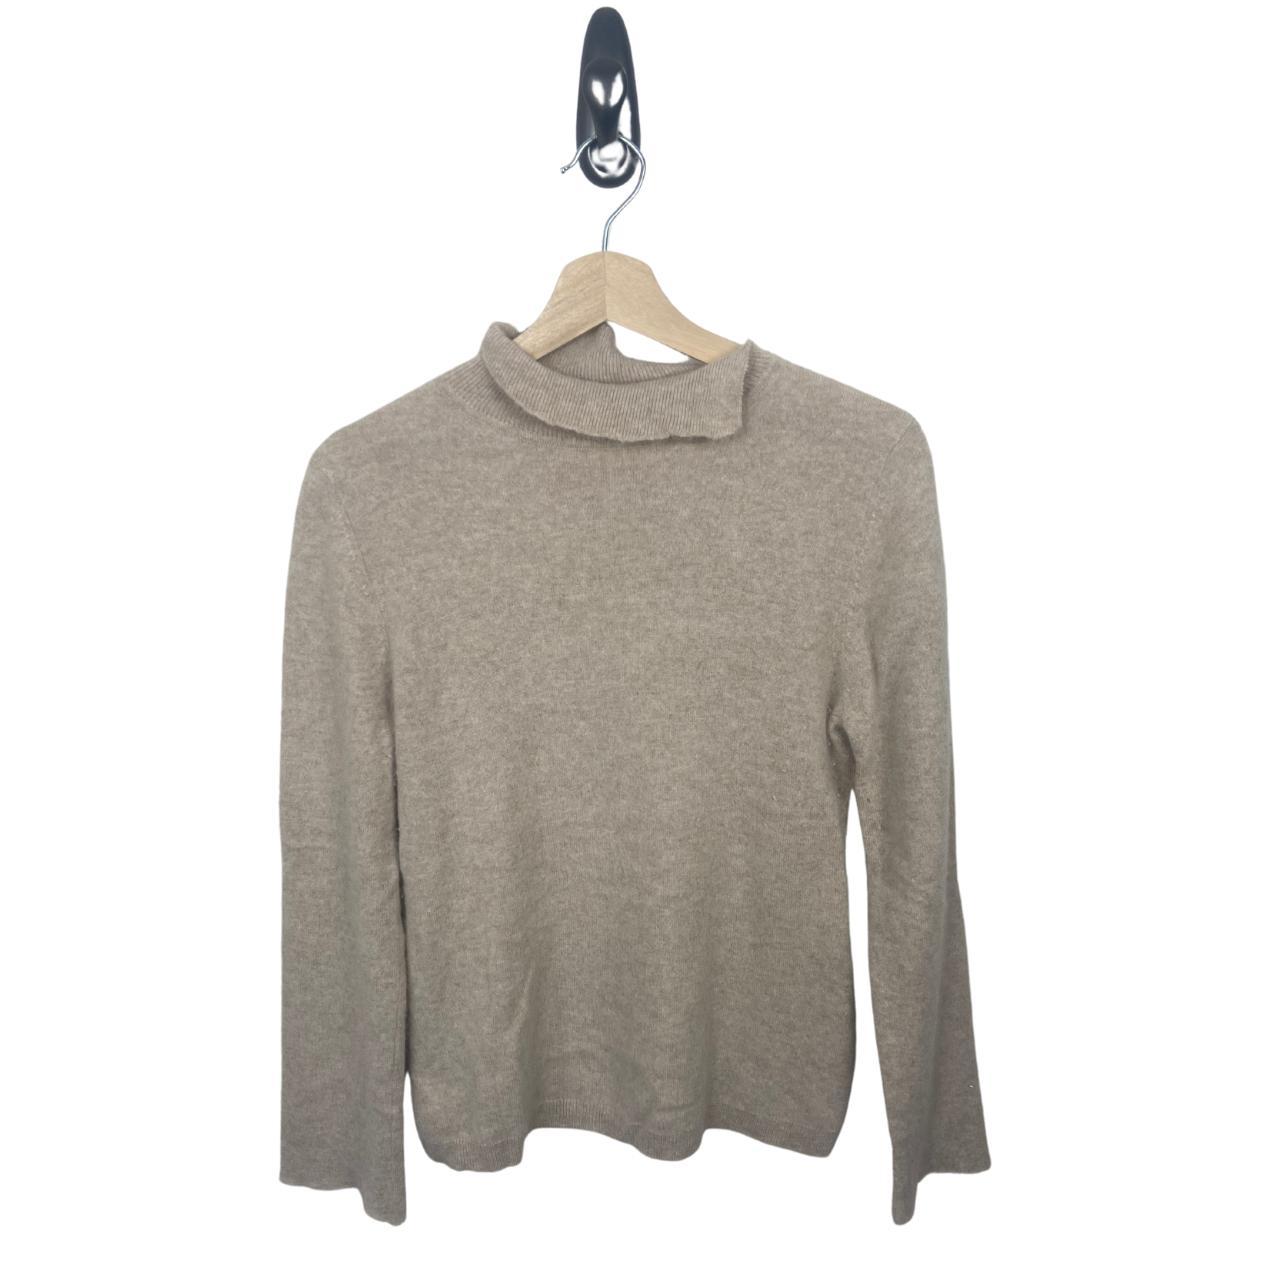 Cream 100% Cashmere Turtleneck Sweater in Cream. No... - Depop